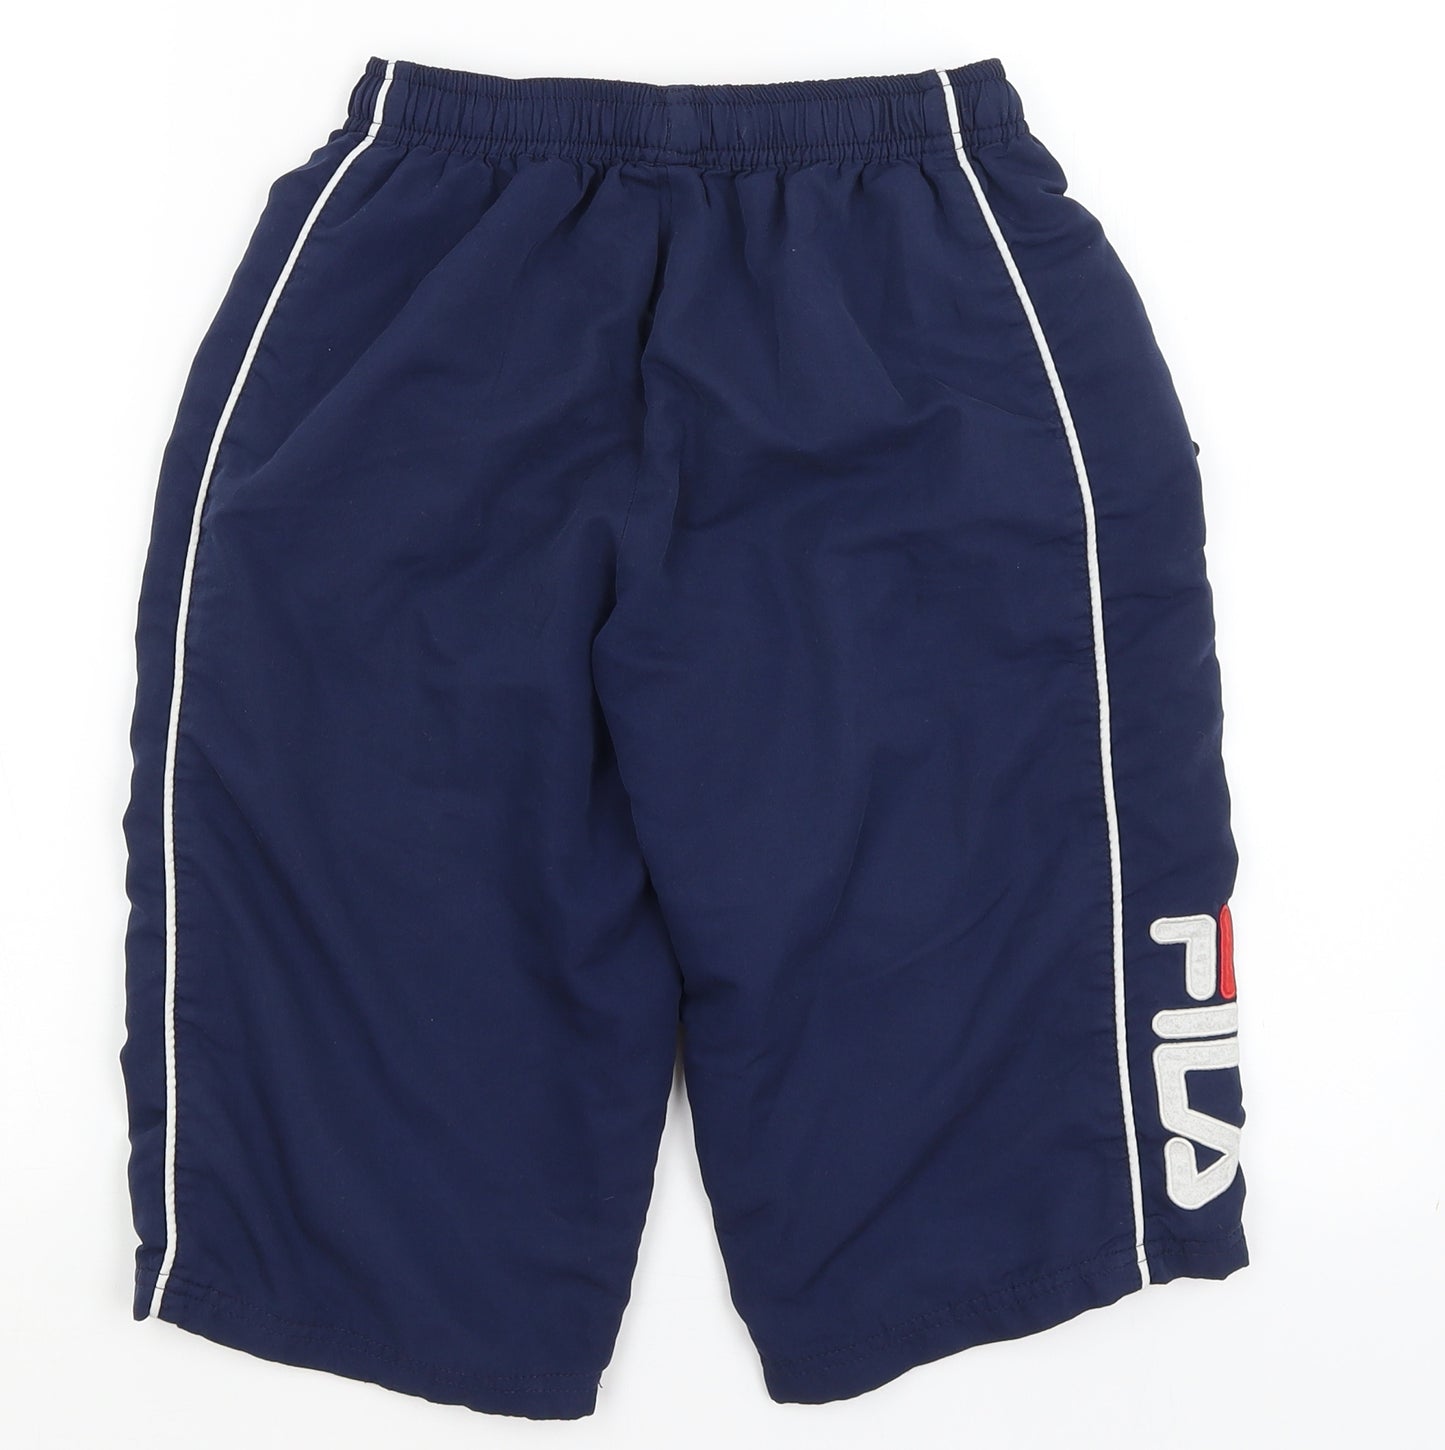 FILA Mens Blue   Athletic Shorts Size S